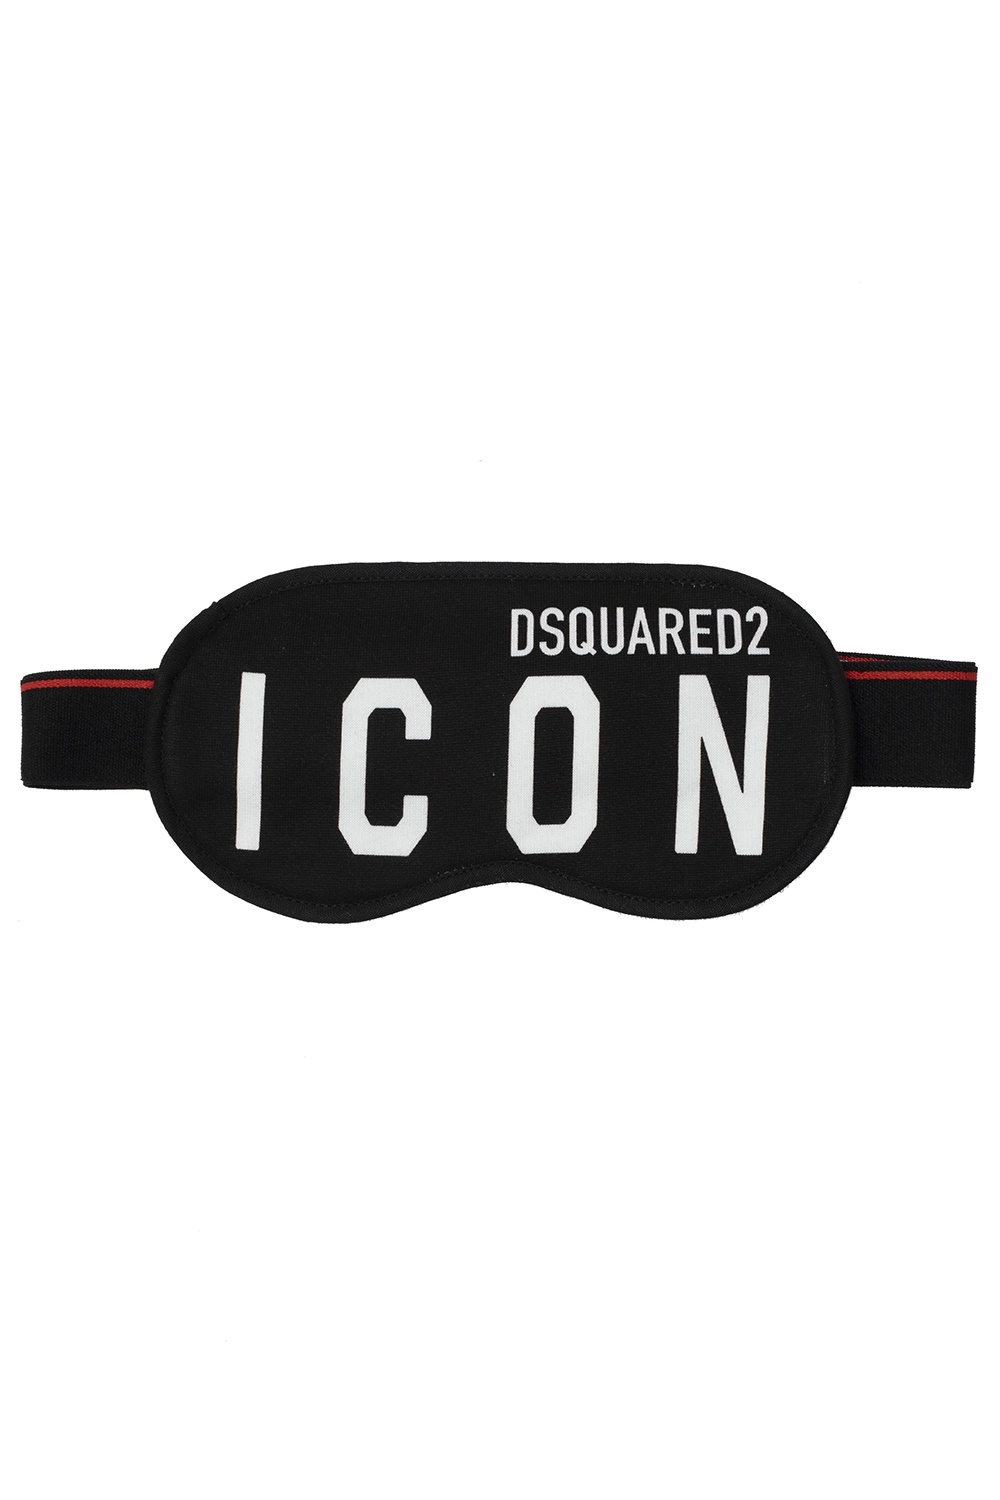 Dsquared2 Sleeping mask with logo